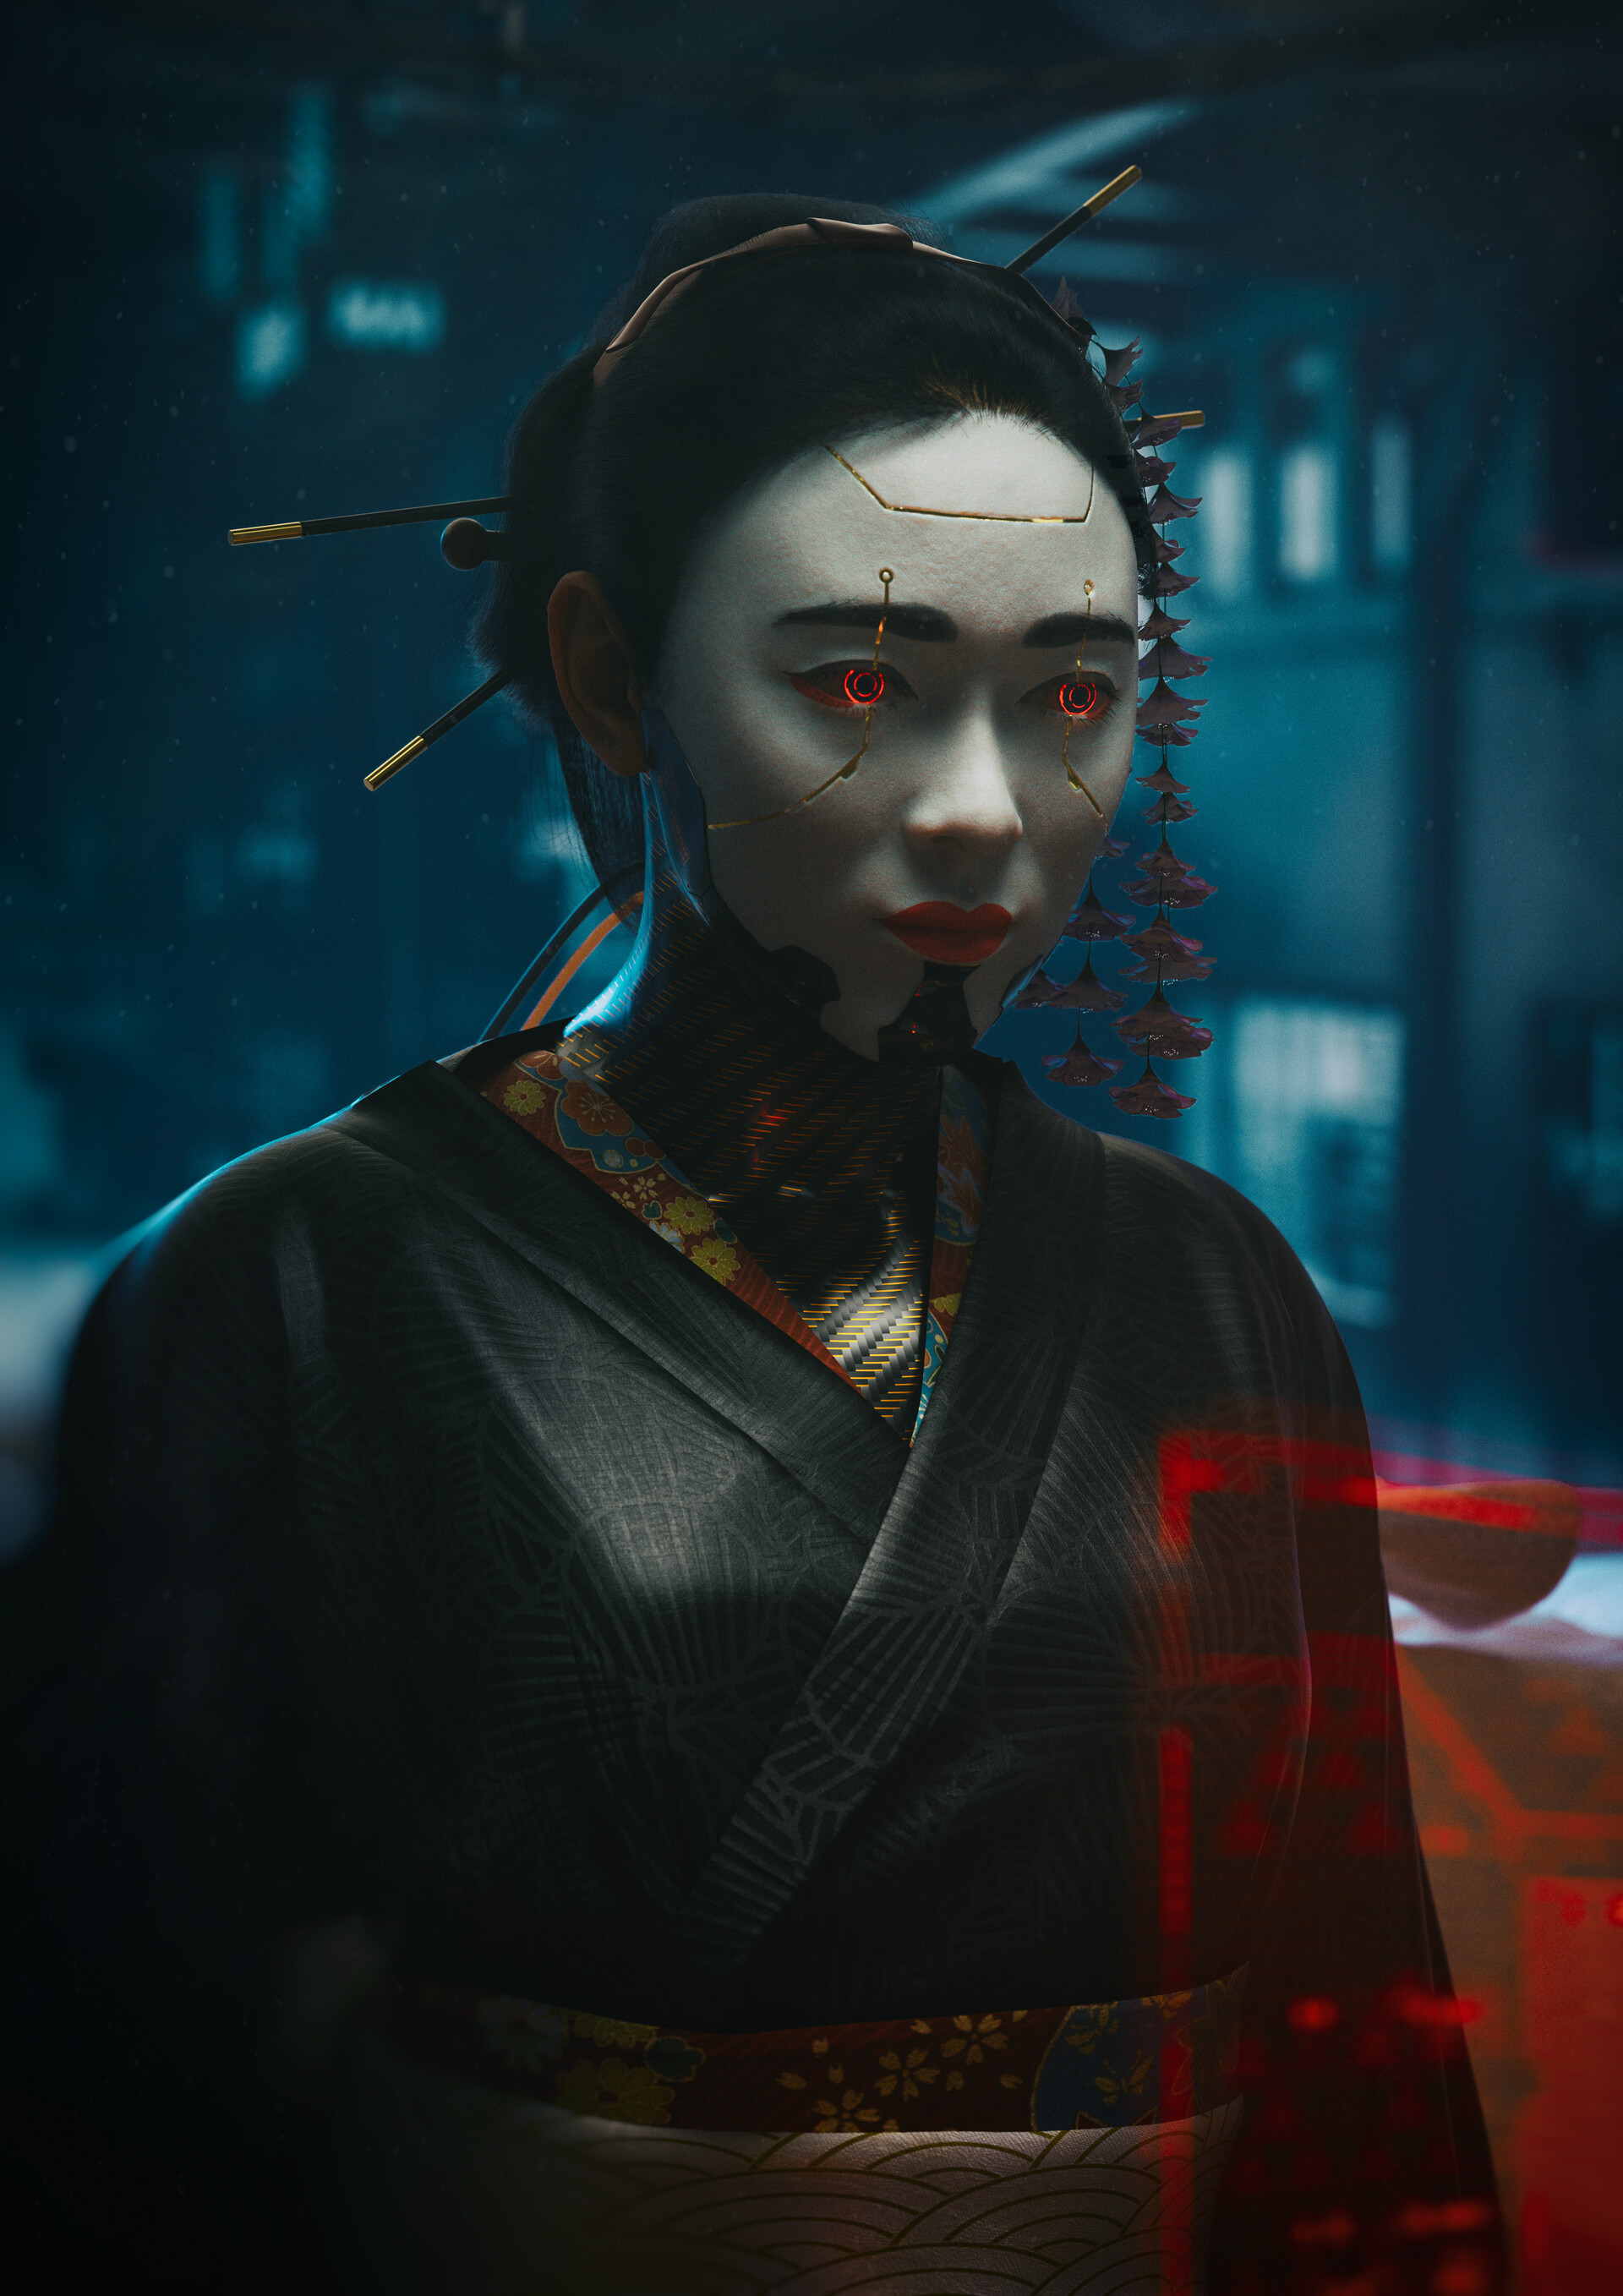 ArtStation - Cyberpunk Geisha